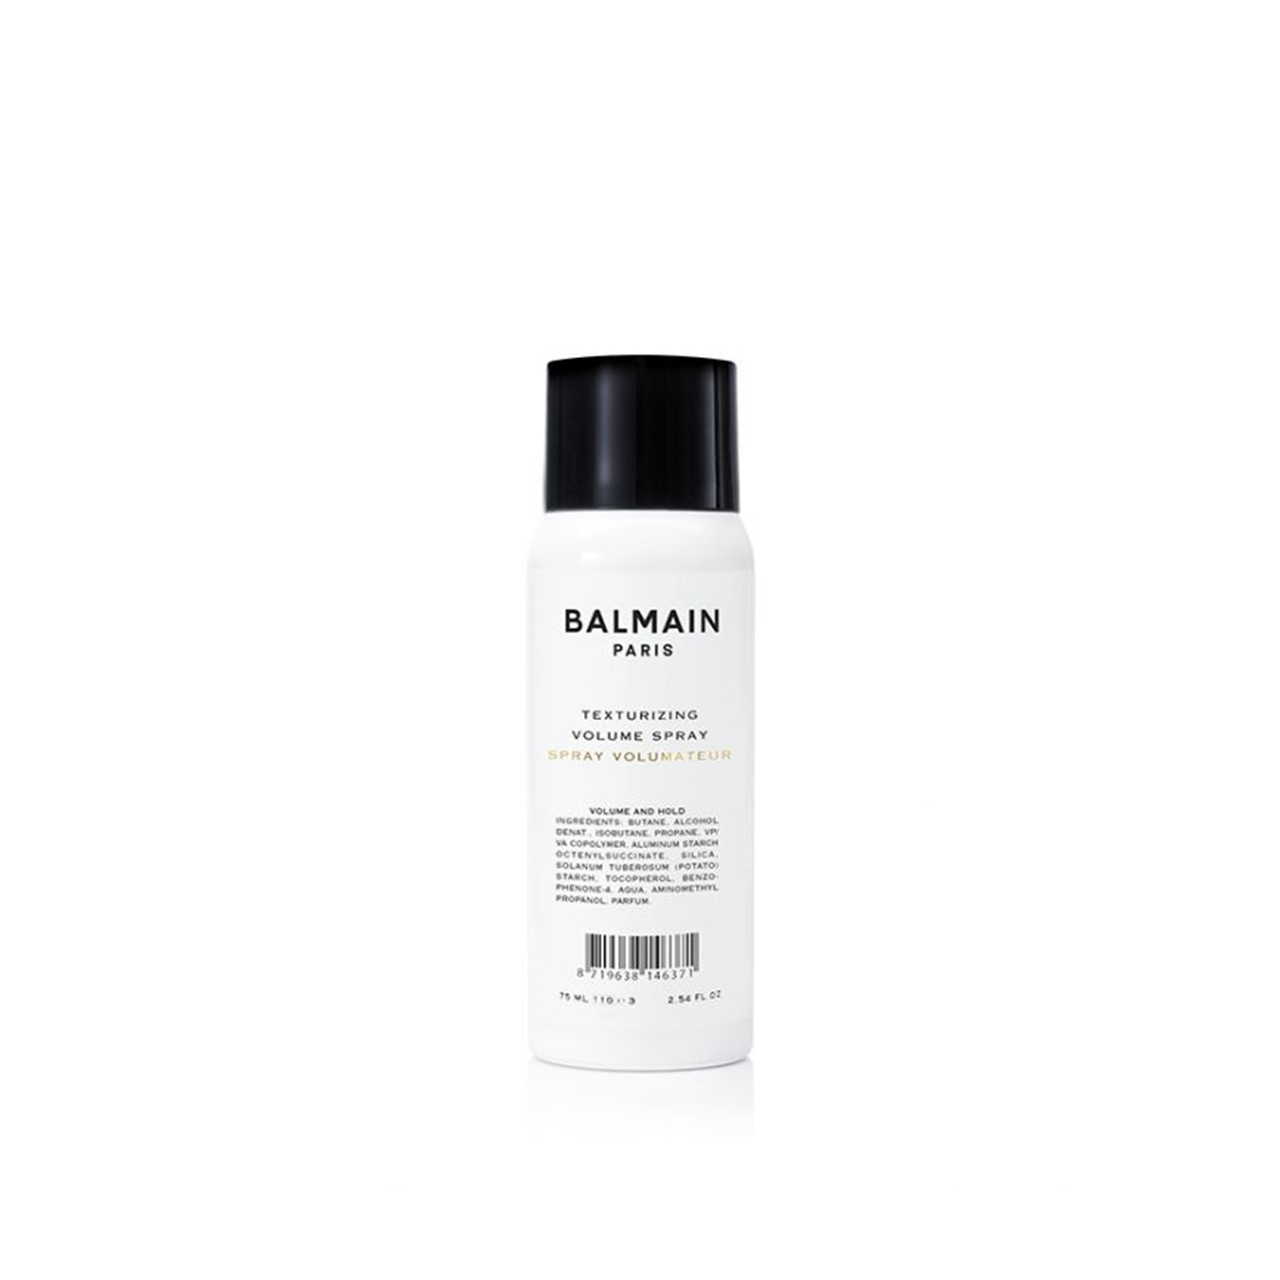 Balmain Hair Texturizing Volume Spray 75ml (2.54 fl oz)